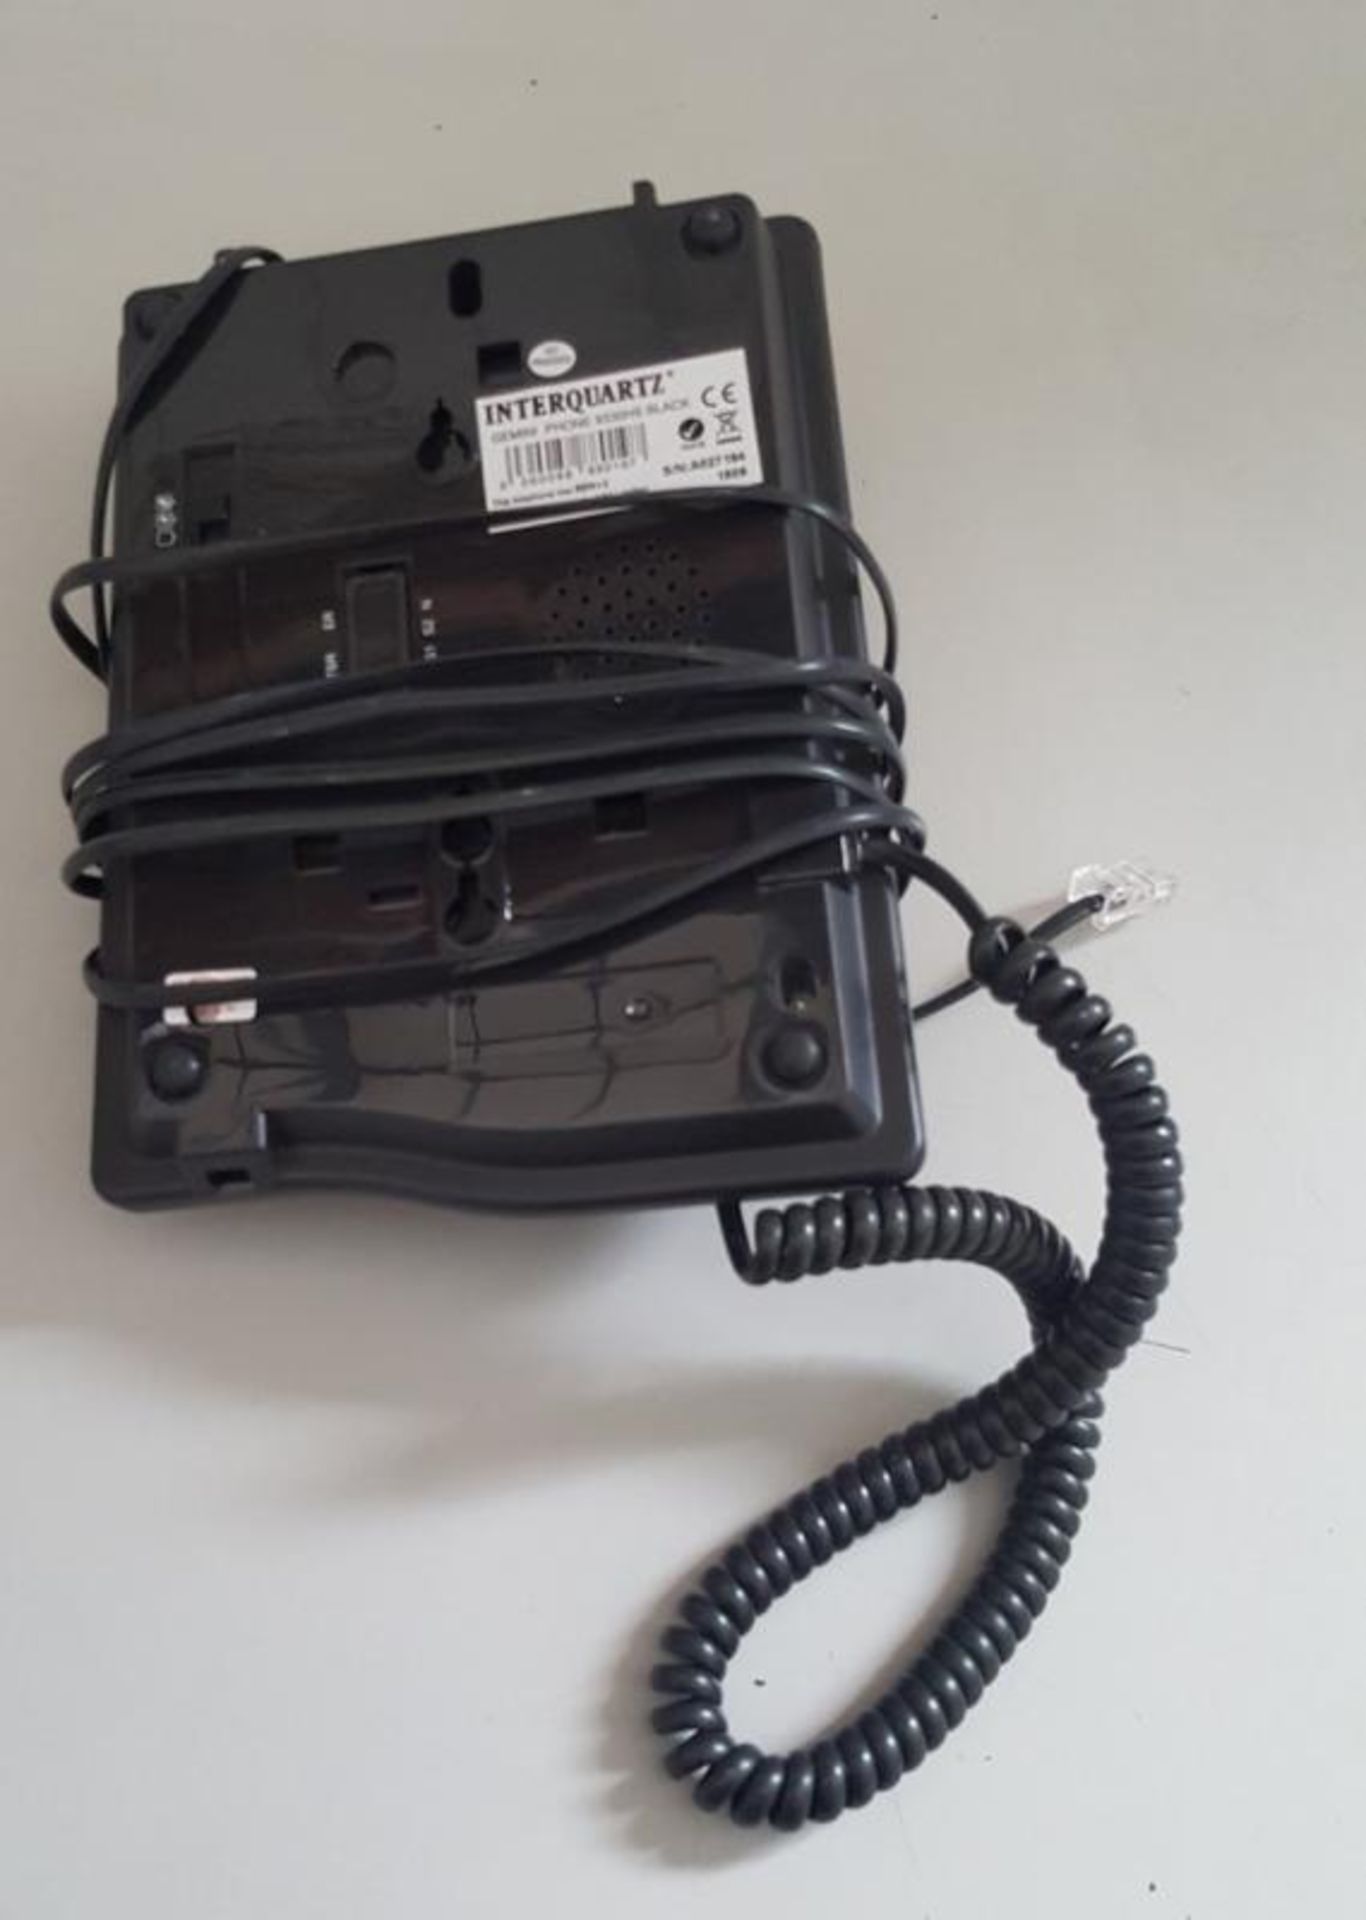 1 x Interquartz Gemini Basic 9330 Corded Office Phone - Ref CQ235/K2 - CL379 - Location: Altrincham - Image 3 of 3